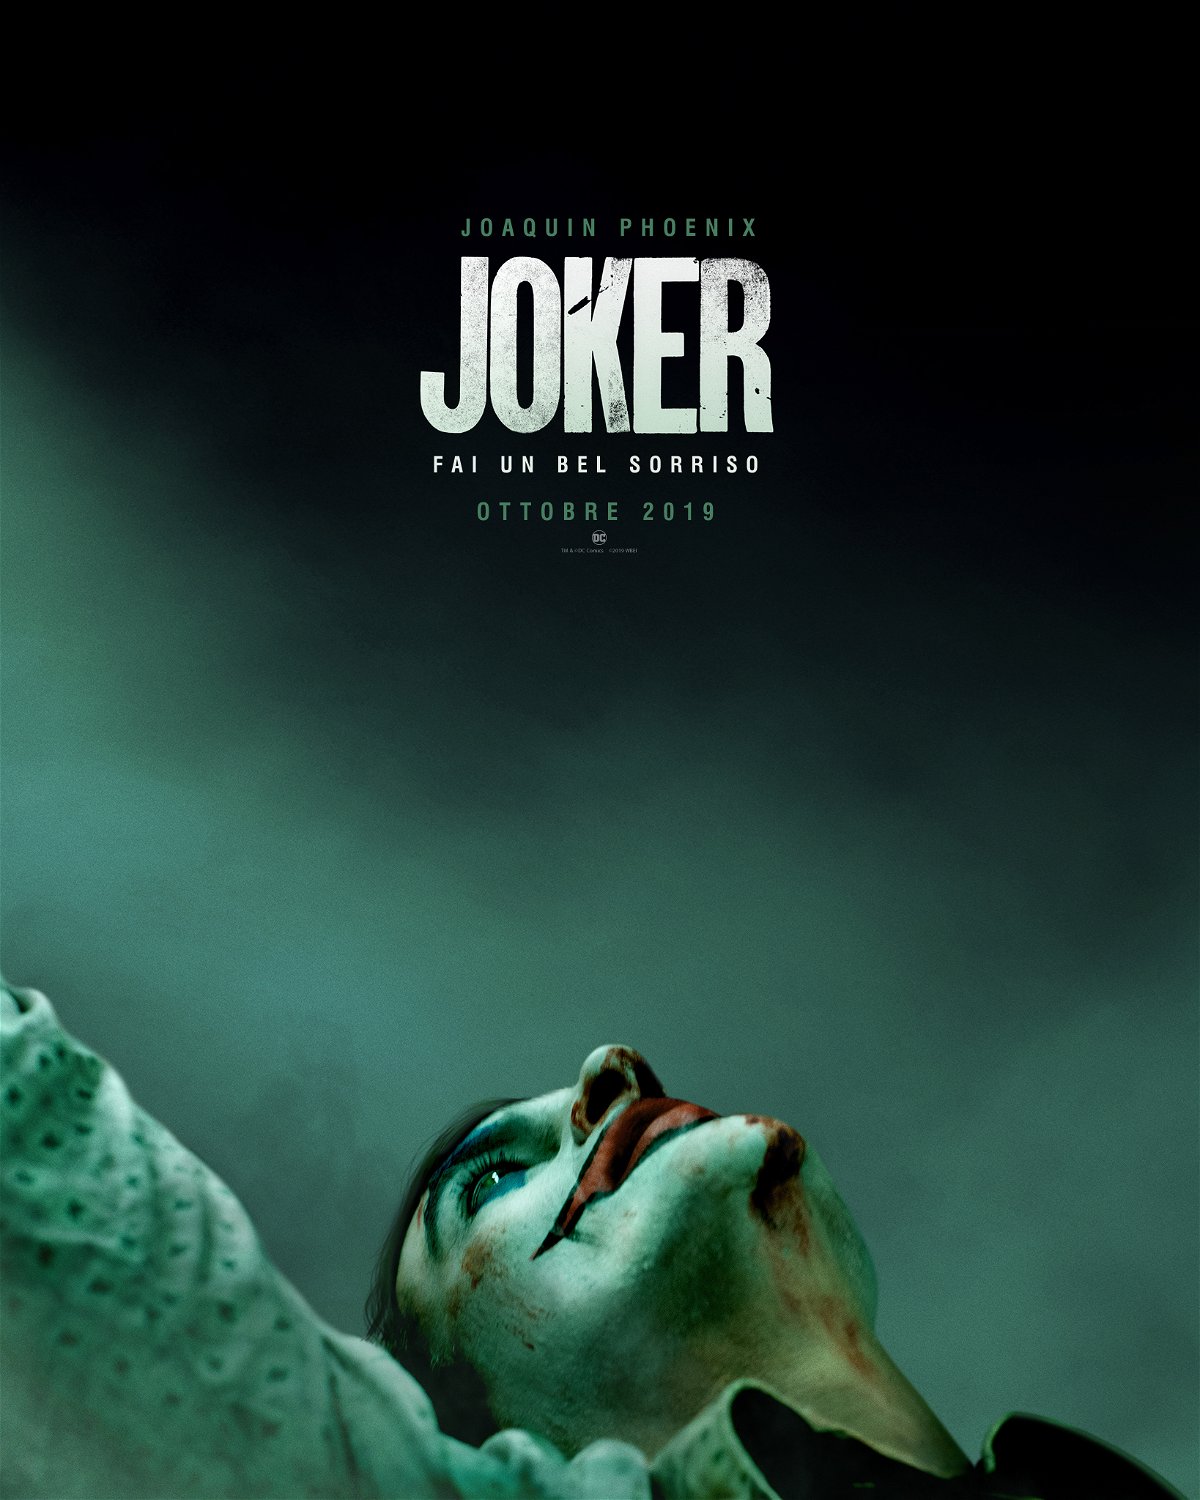 Joker esce a ottobre 2019 nei cinema italiani